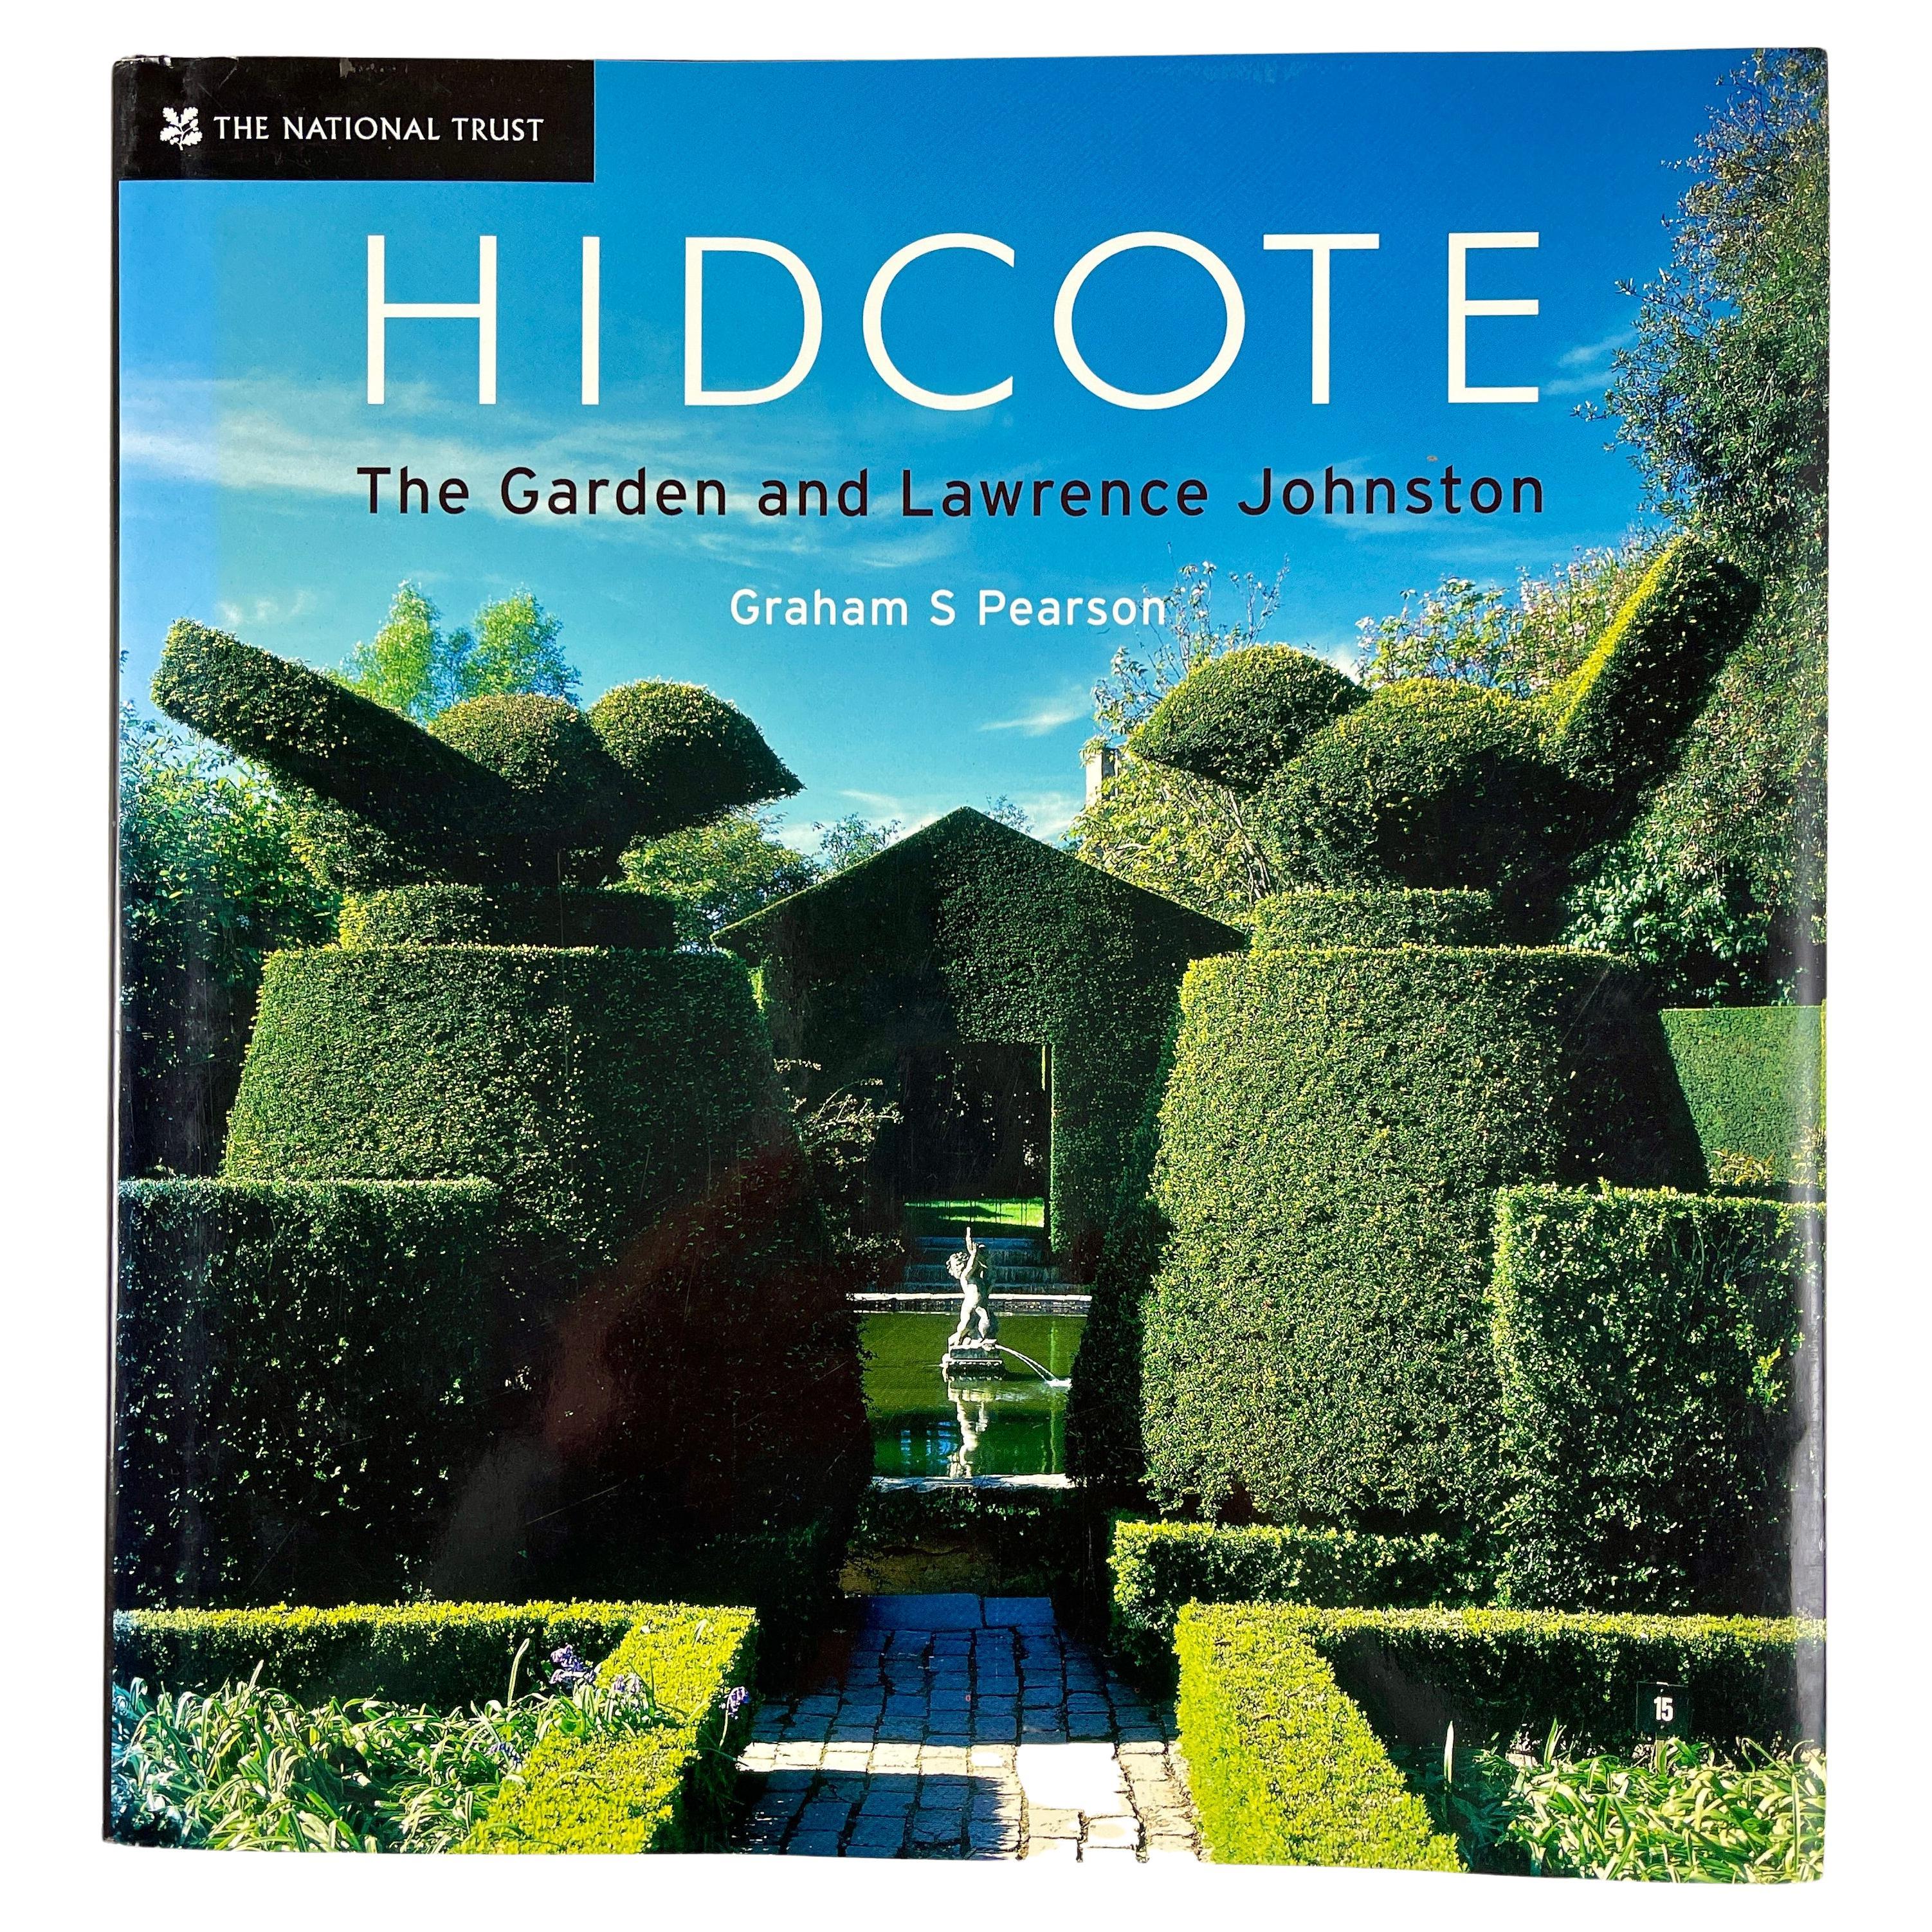 Hidcote the Garden und Lawrence Johnston, National Trust Book